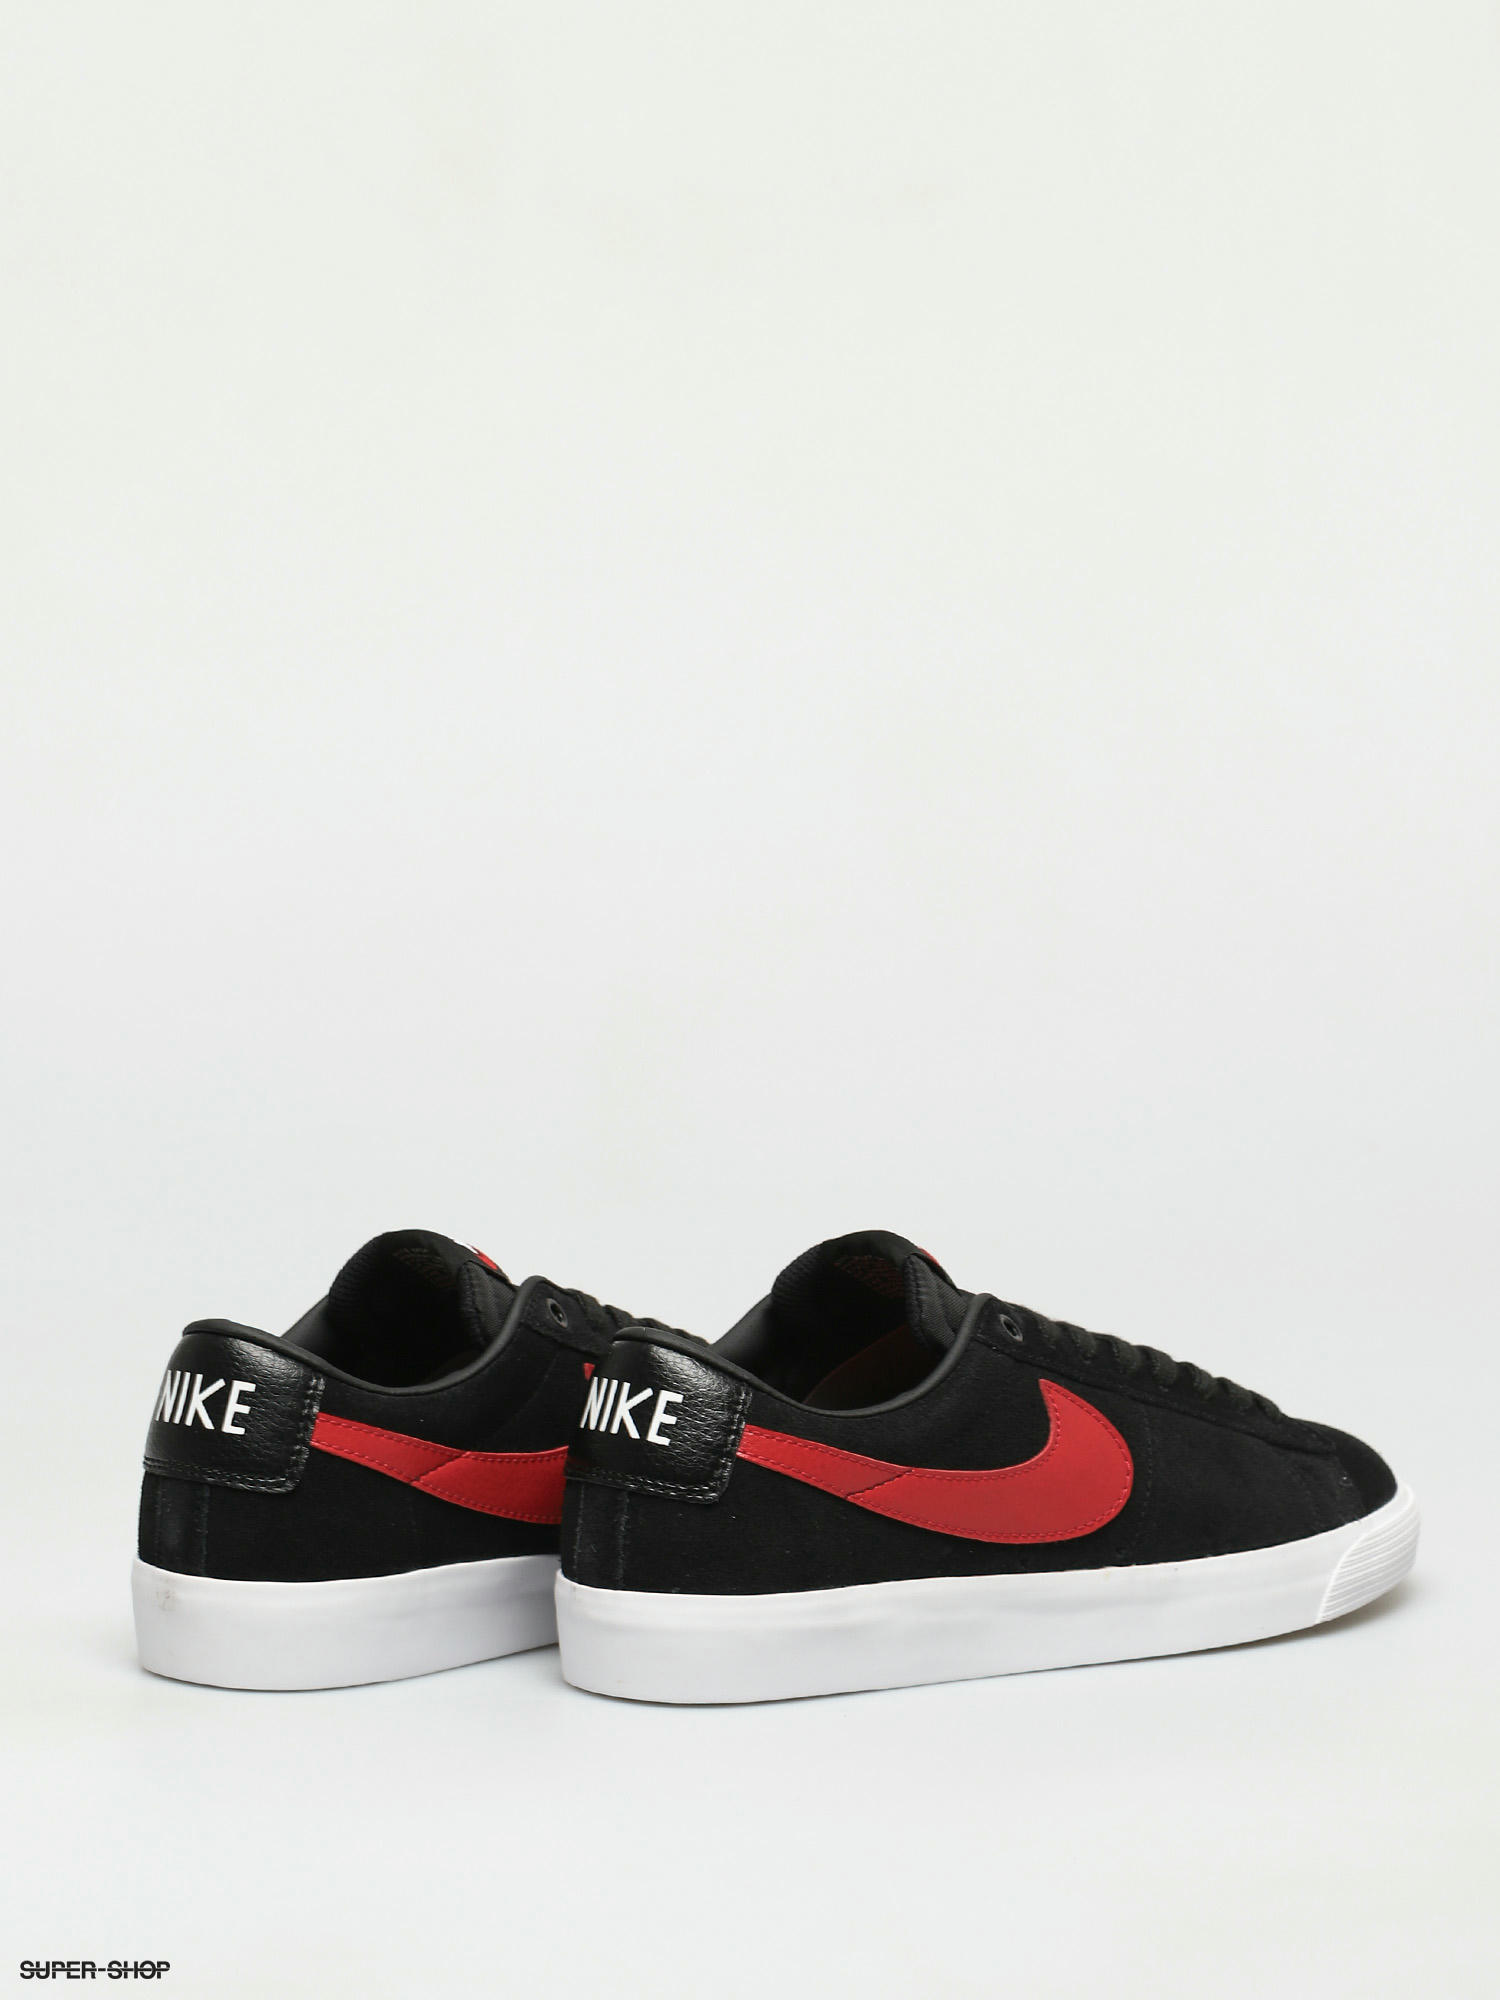 Nike Sb Blazer Low Gt Shoes Black University Red Black White